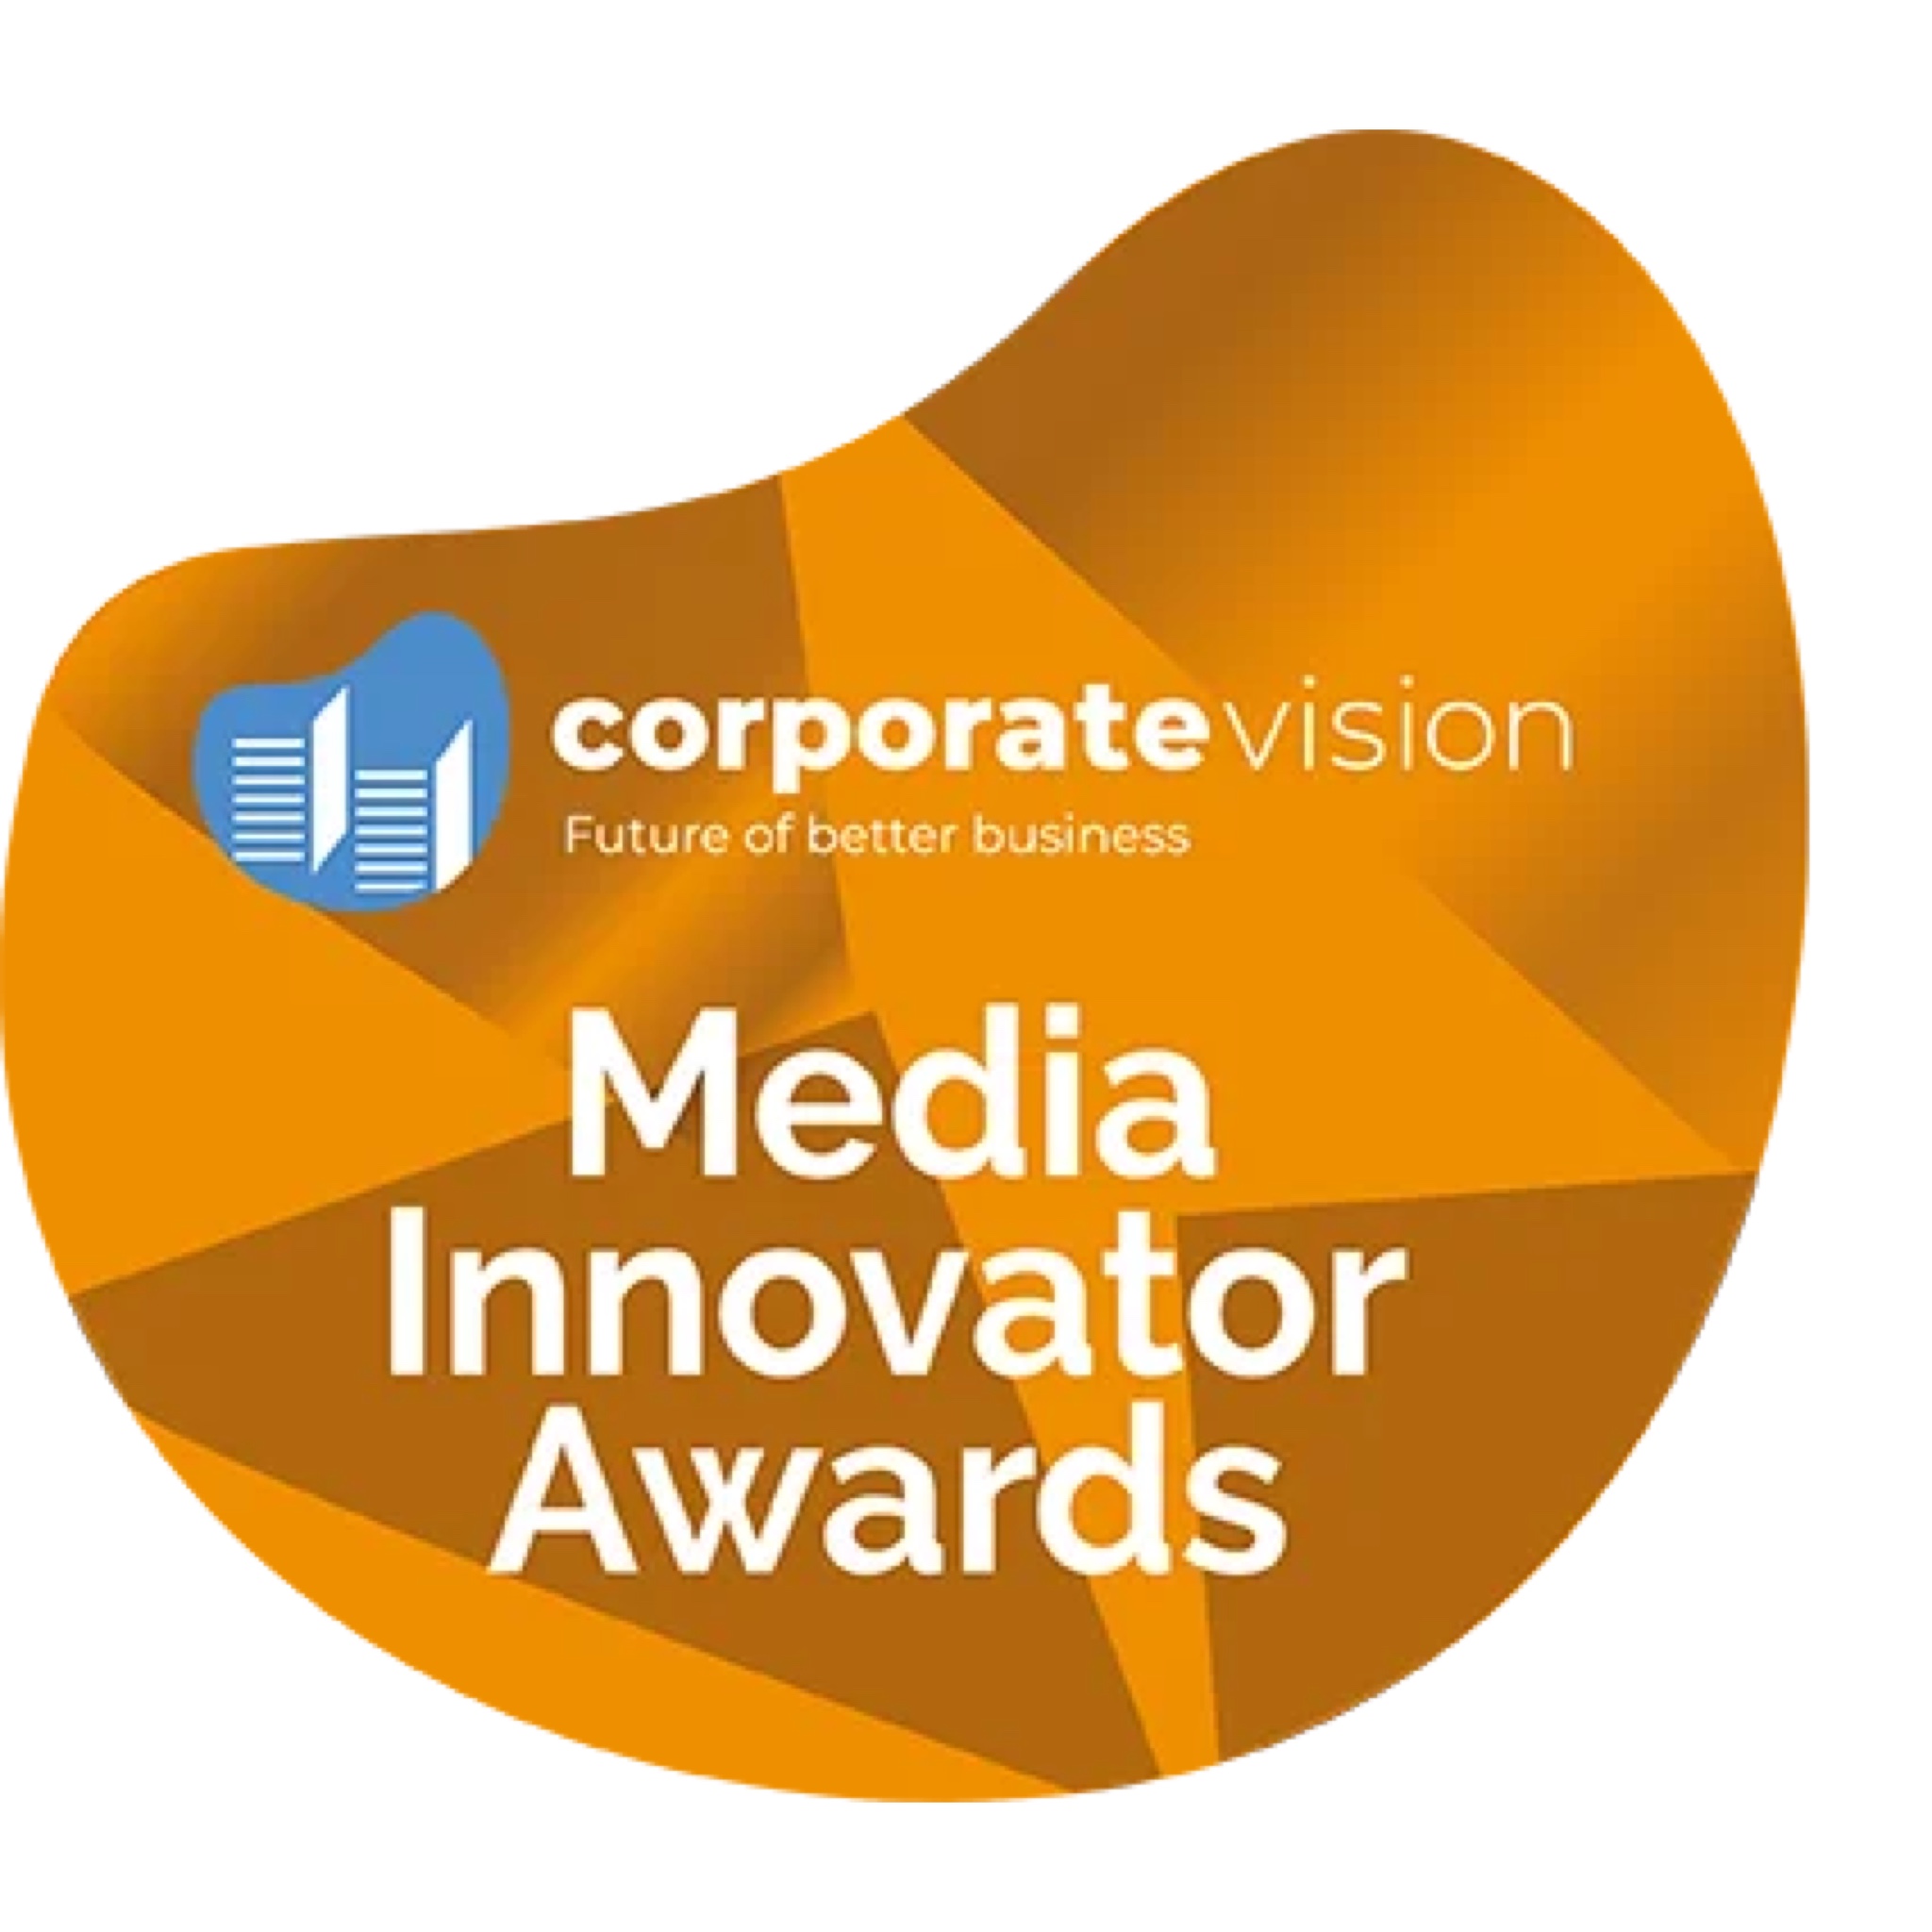 United States Altered State Productions, Media Innovator Awards - Corporate Vision ödülünü kazandı